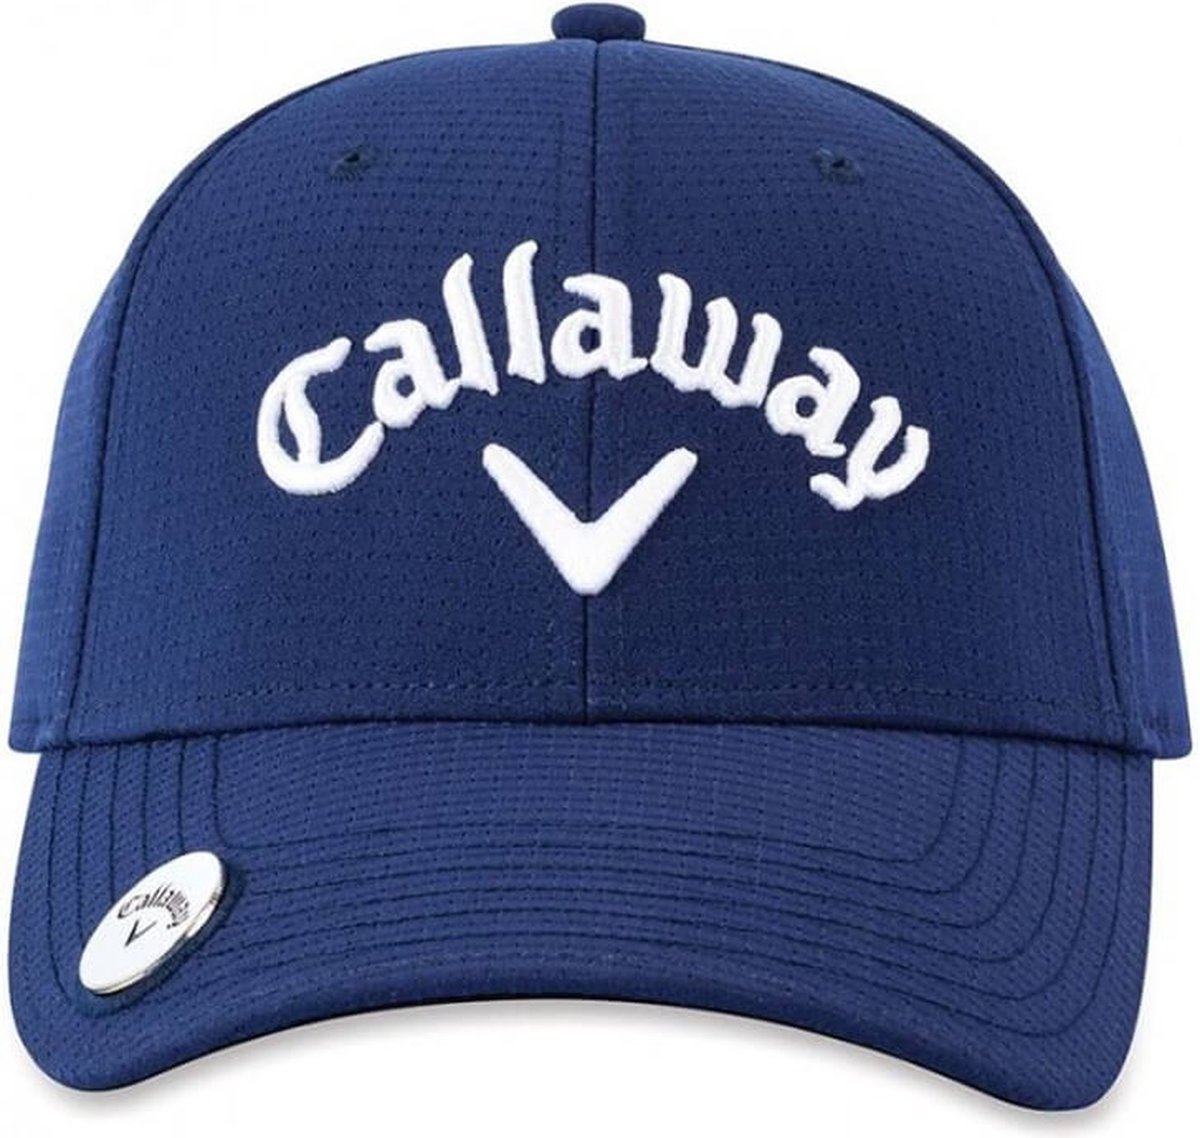 Callaway Stitch Magnet Cap - Marine Blauw